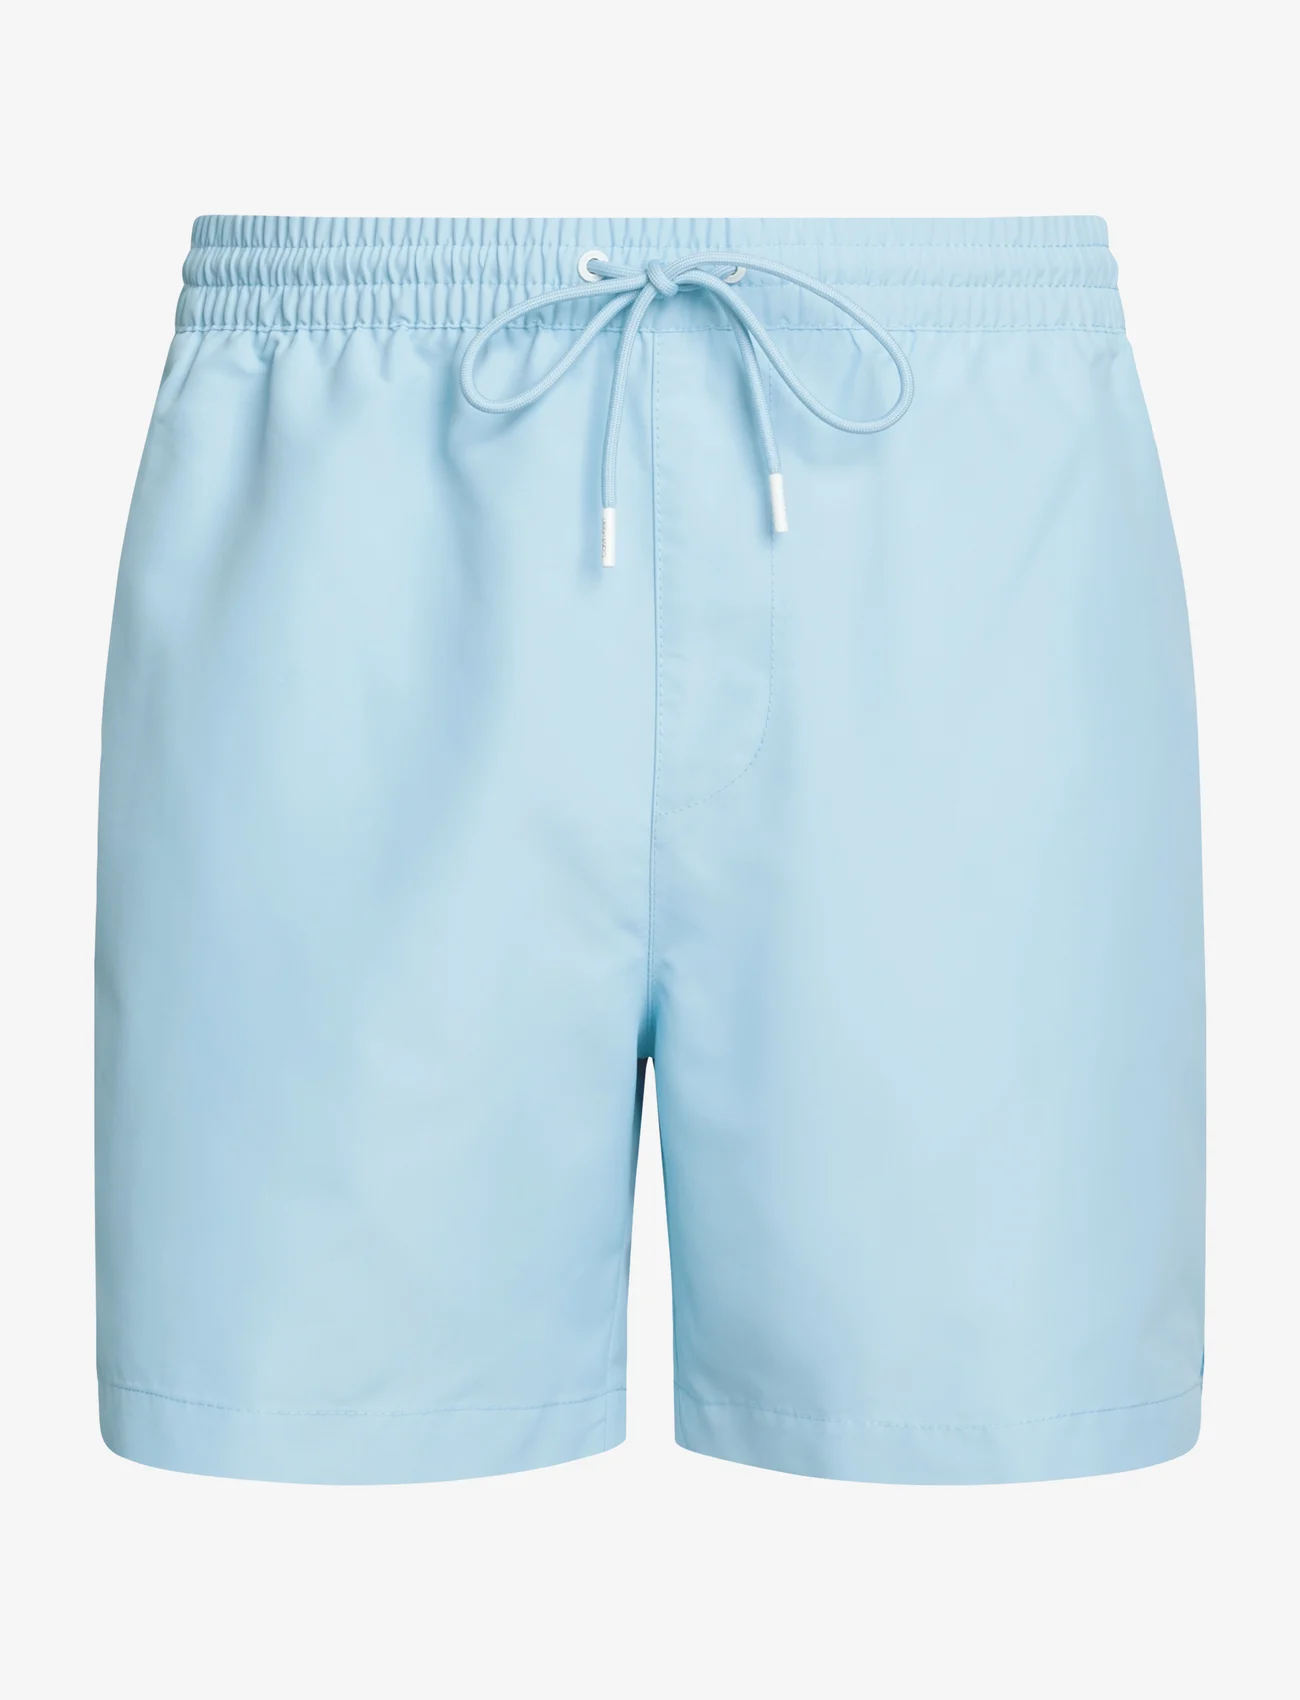 Calvin Klein - MEDIUM DRAWSTRING - shorts - pleasant blue - 0